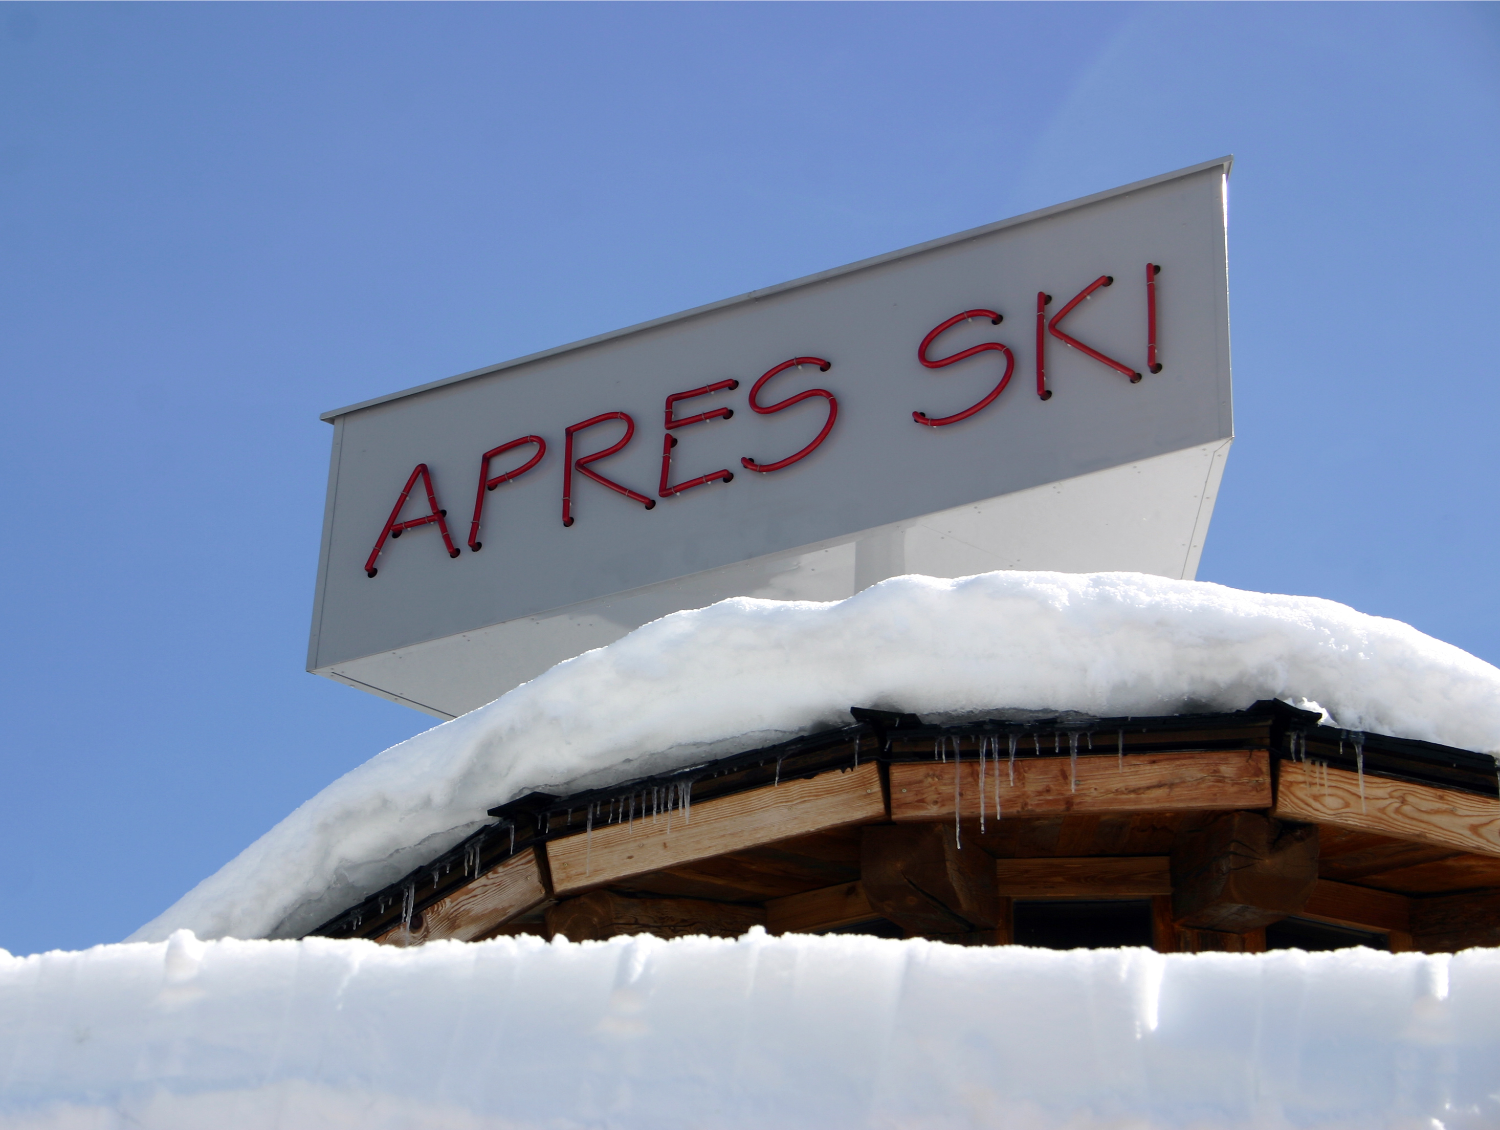 Apres Ski Sign with Snow